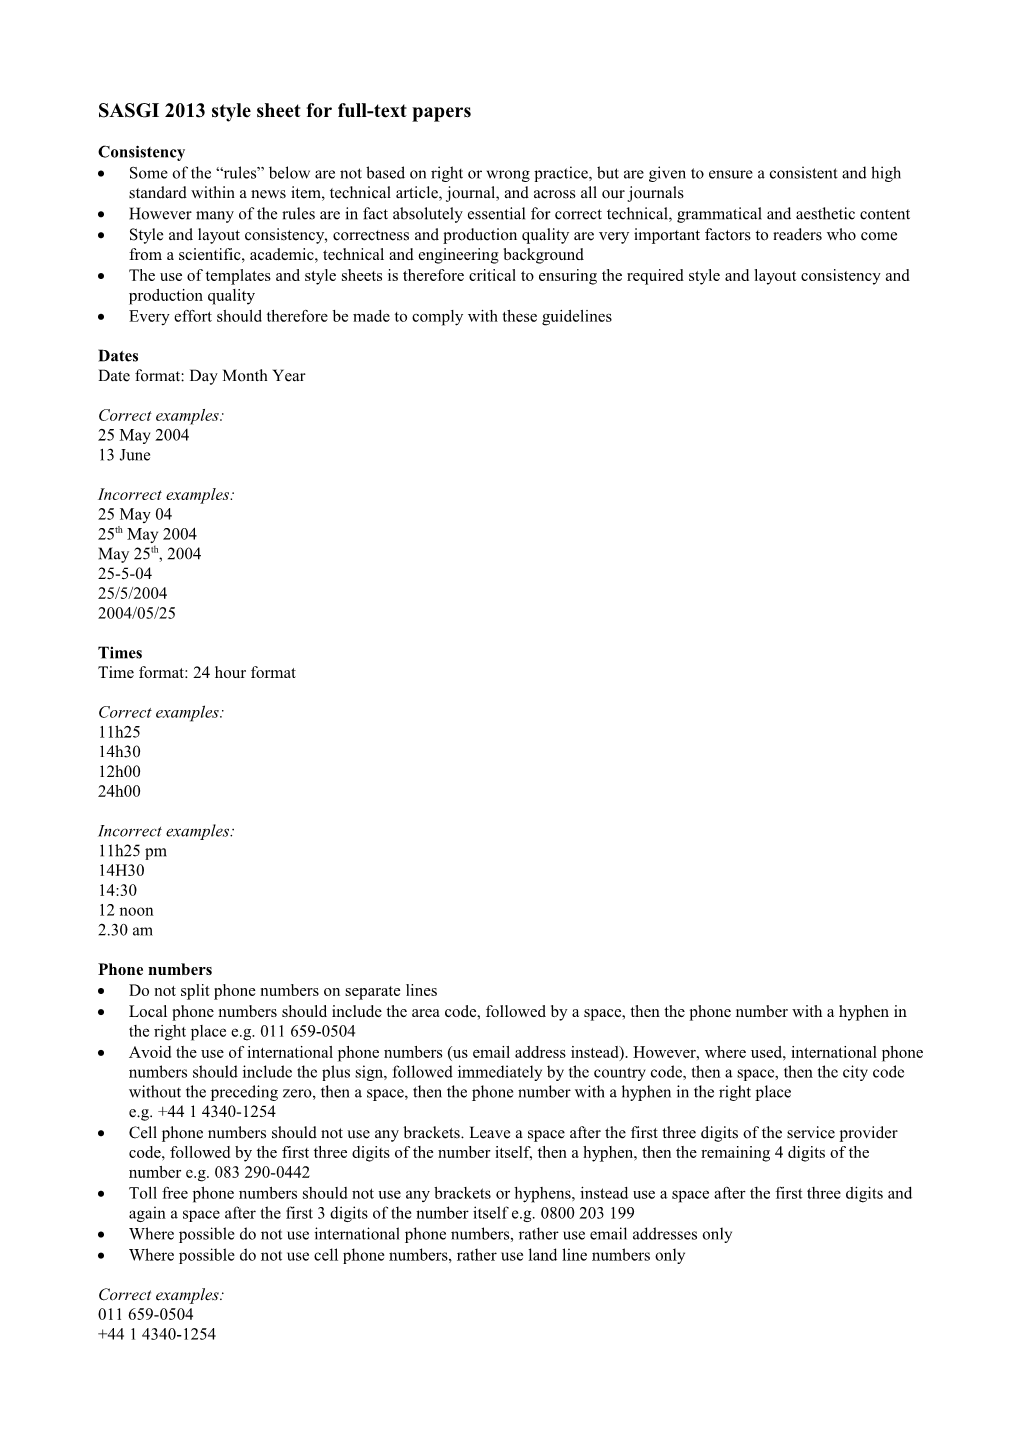 SASGI 2013 Stylesheet for Full-Text Papers